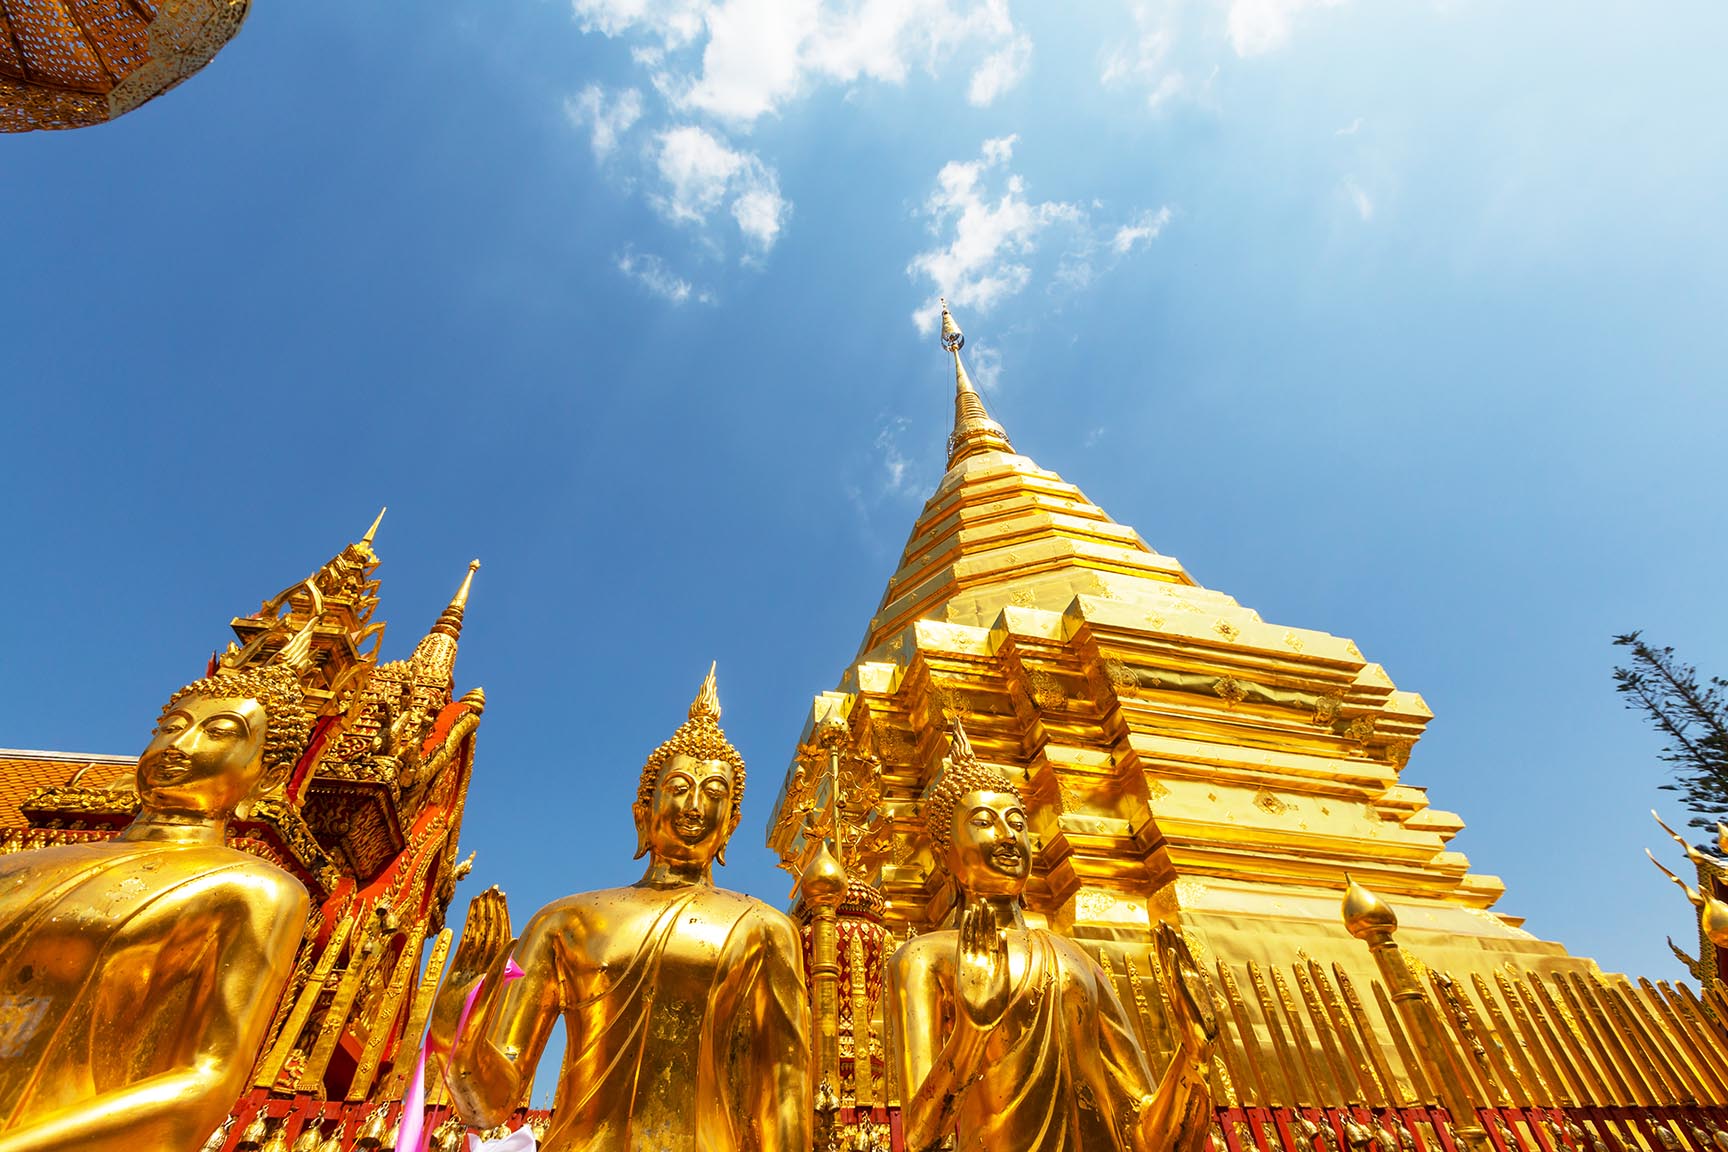 Chiang Mai’da gezilecek en iyi yerler - Wat Phra That Doi Suthep